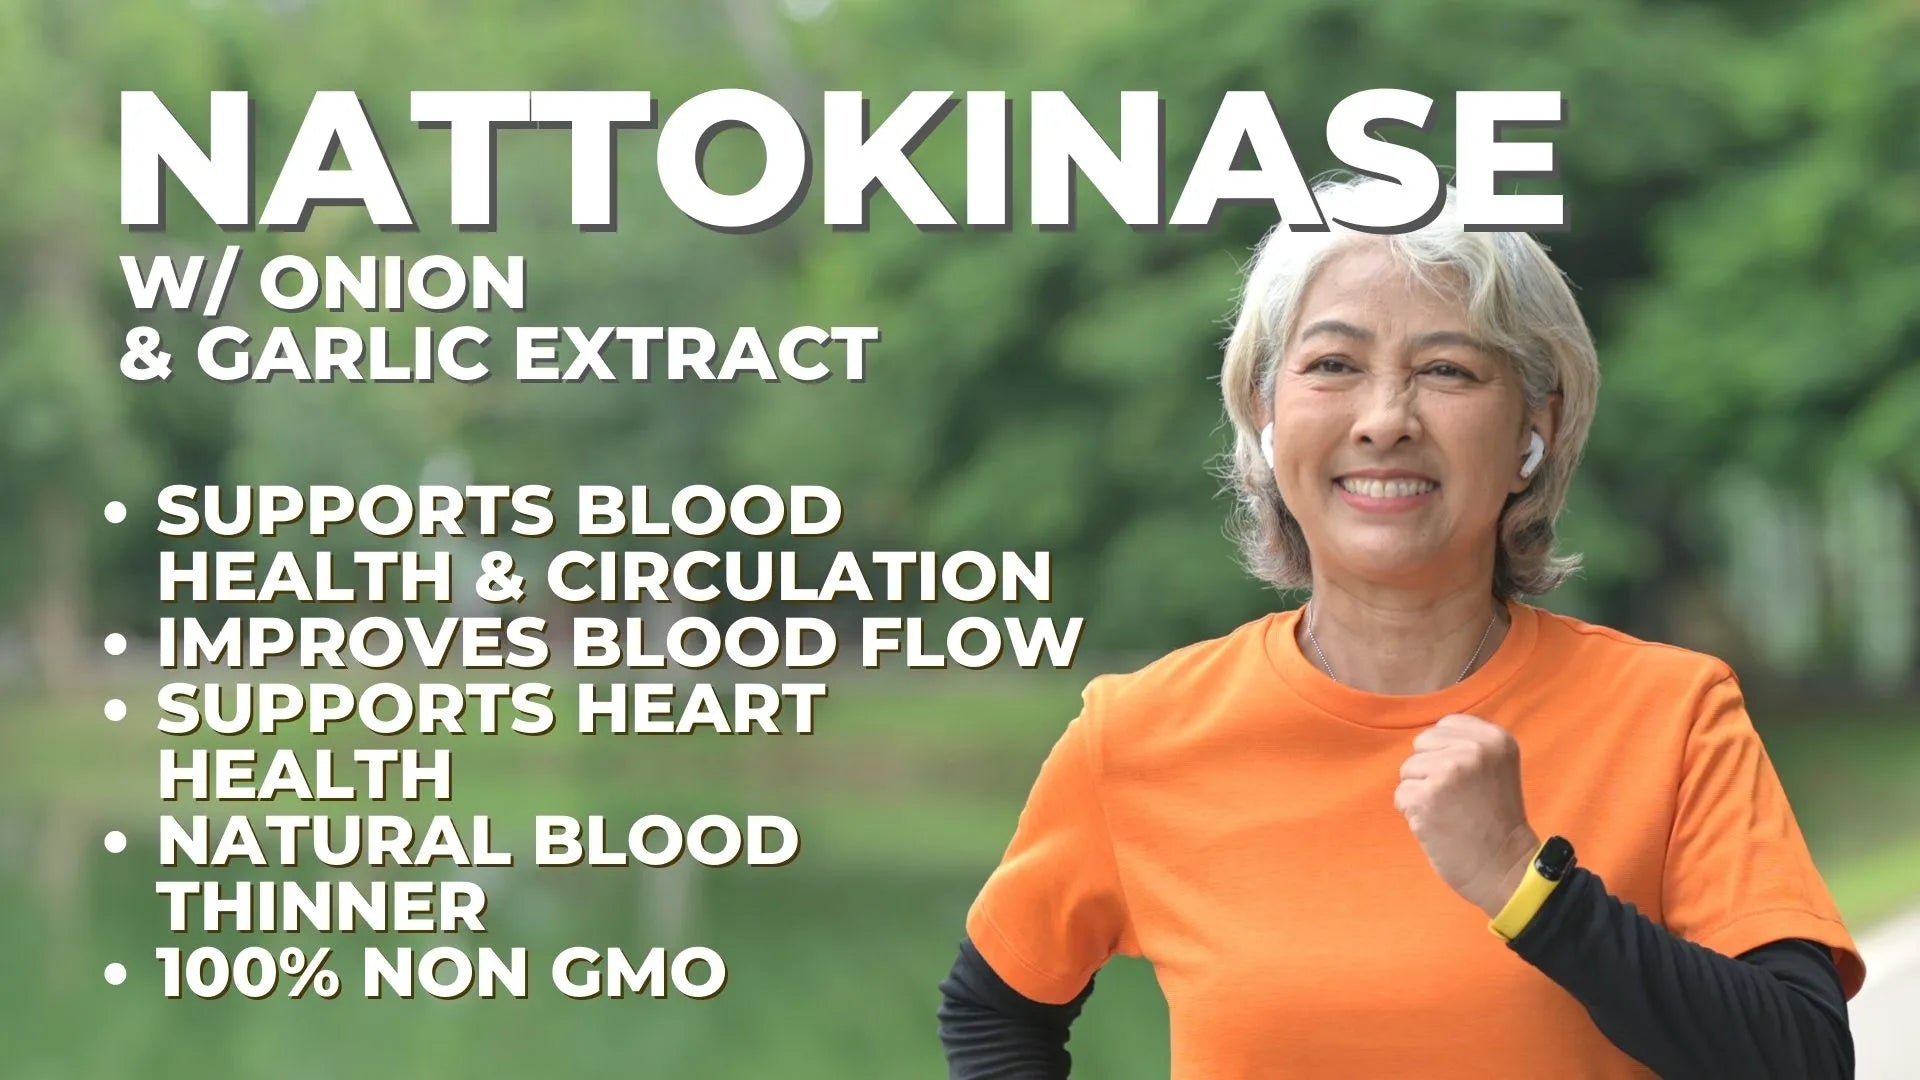 nattokinase 2000fu for blood health, circulation and heart health